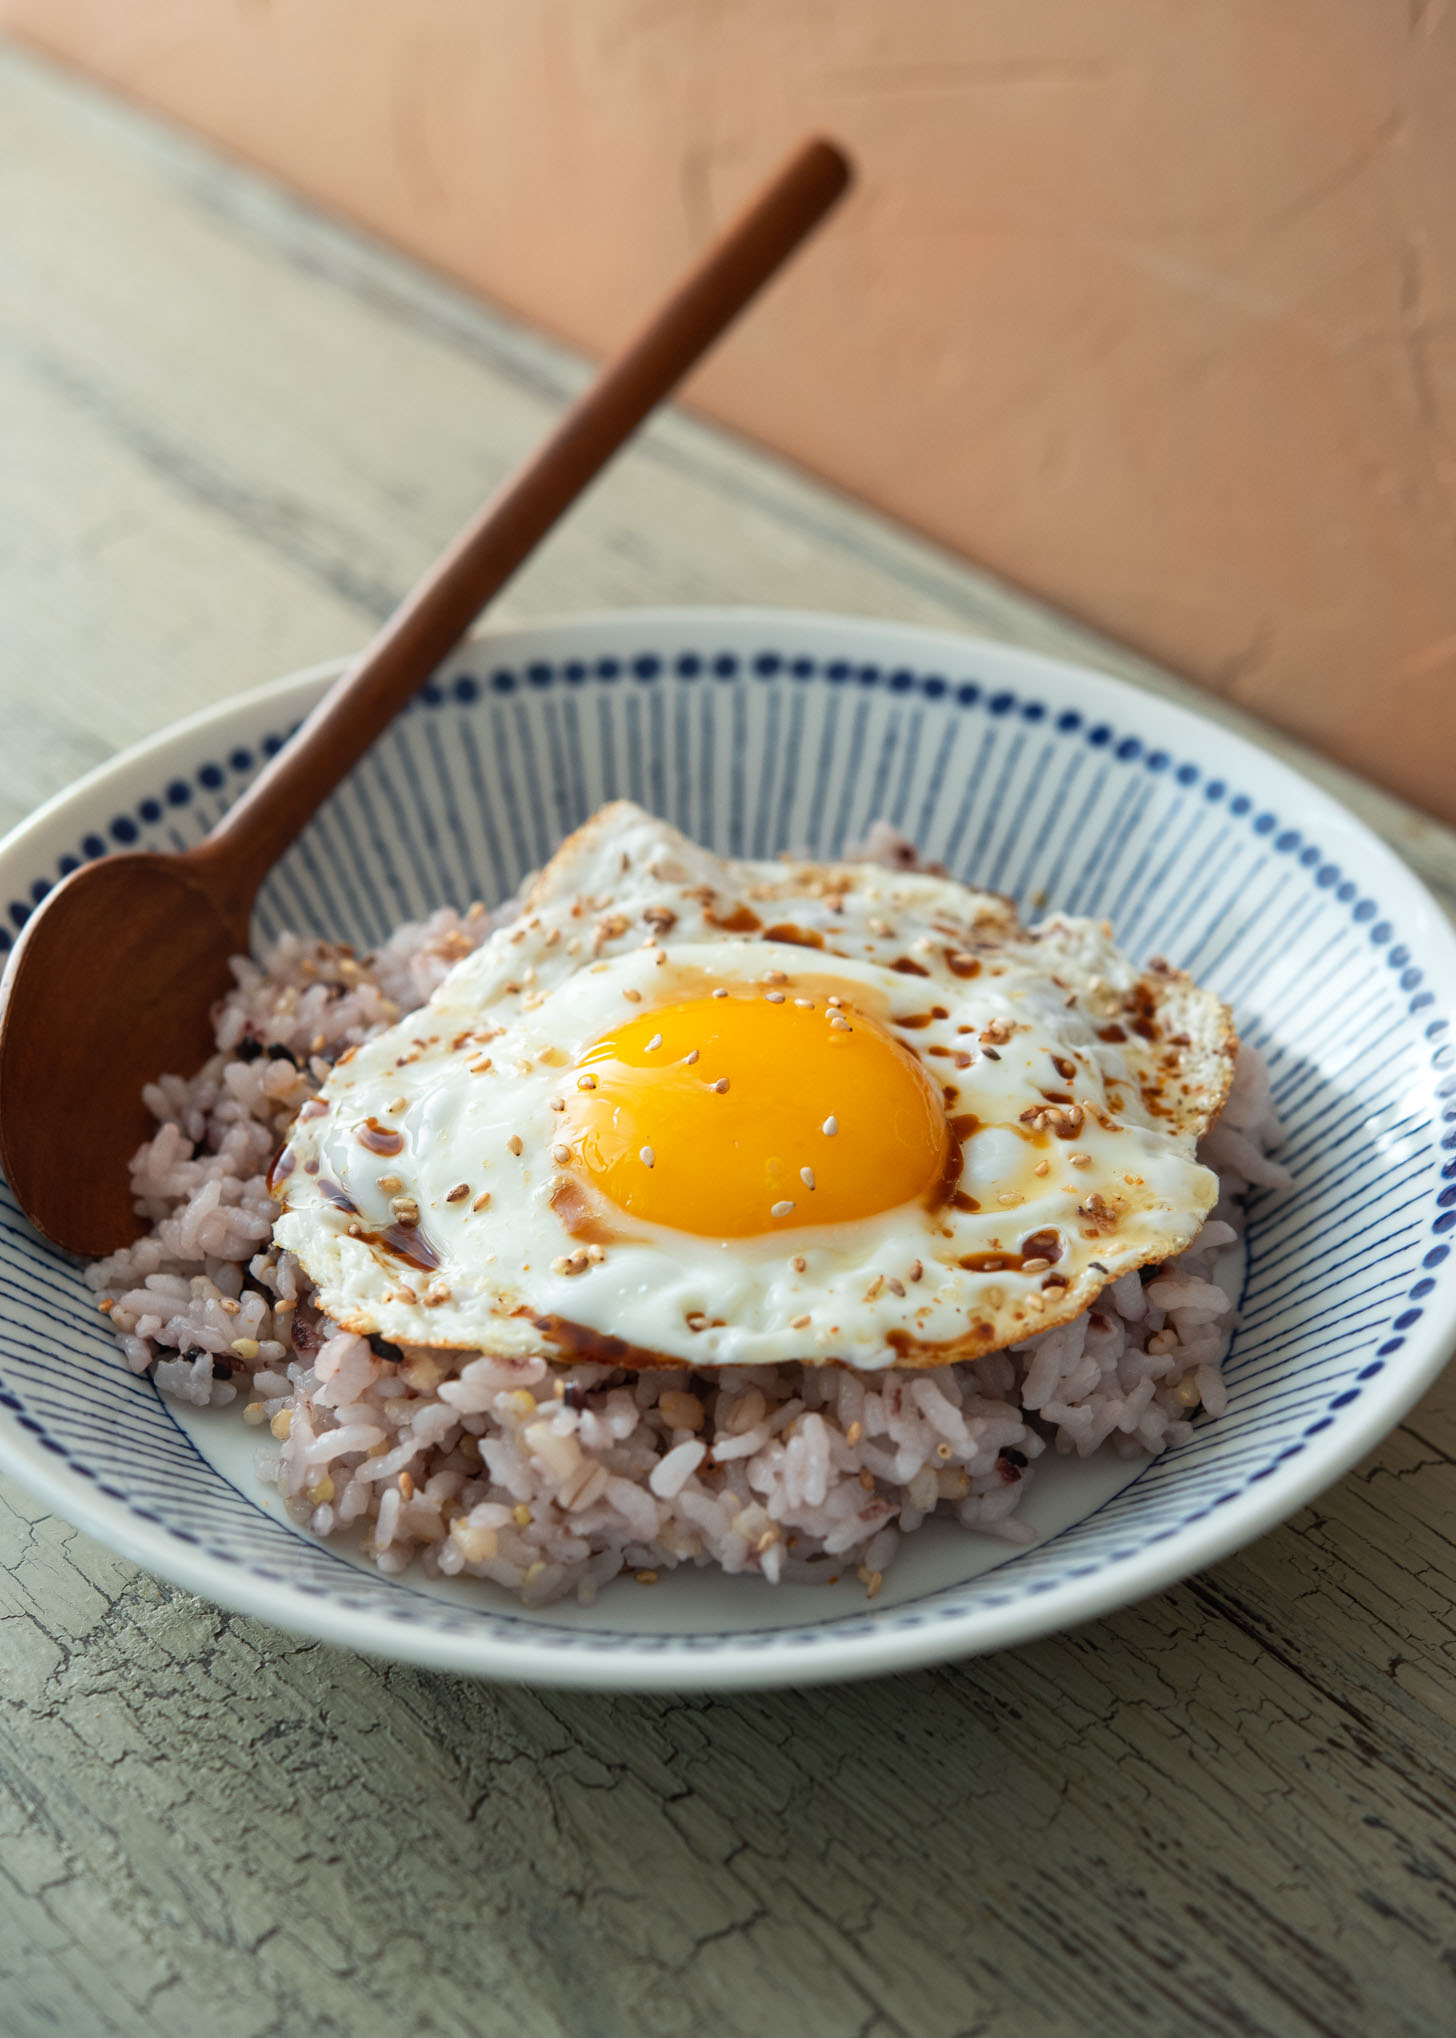 Fried egg with rice to make gyeran bop, Korean breakfast.